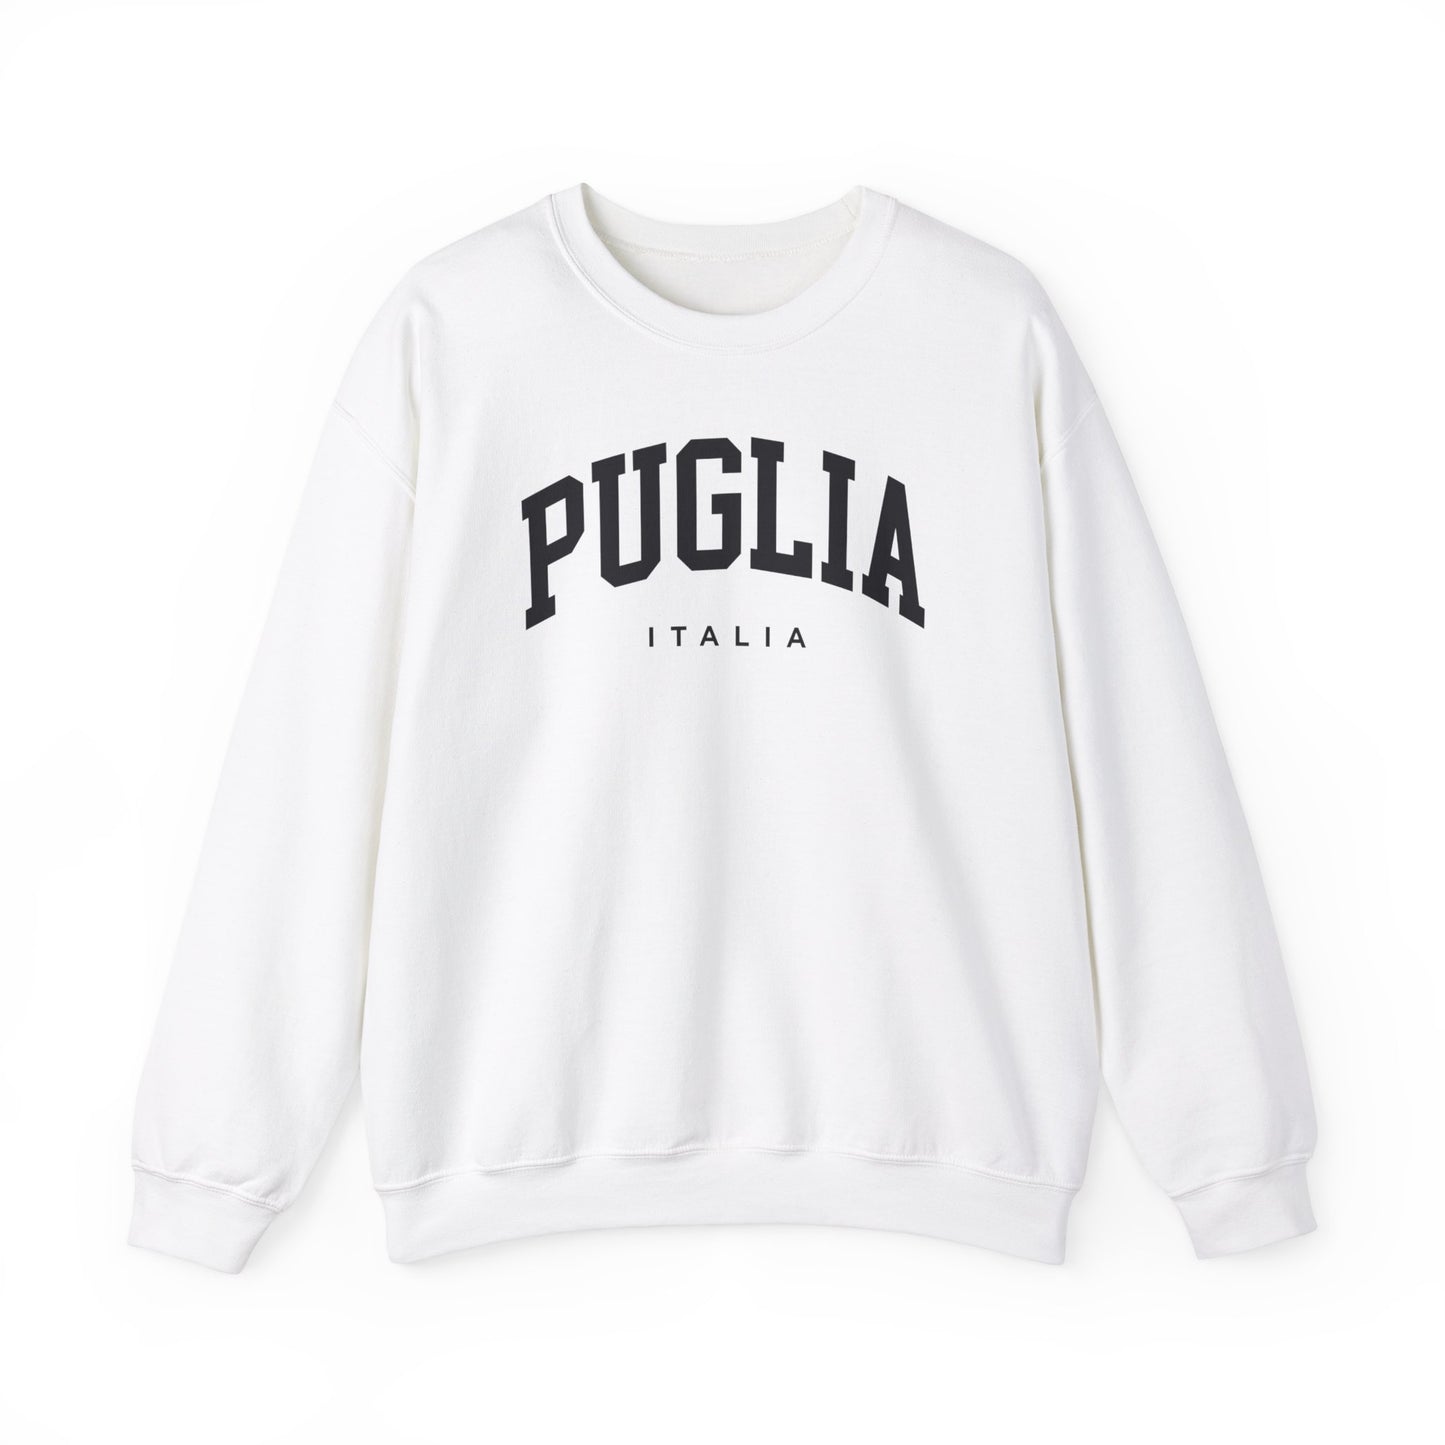 Apulia Italy Sweatshirt